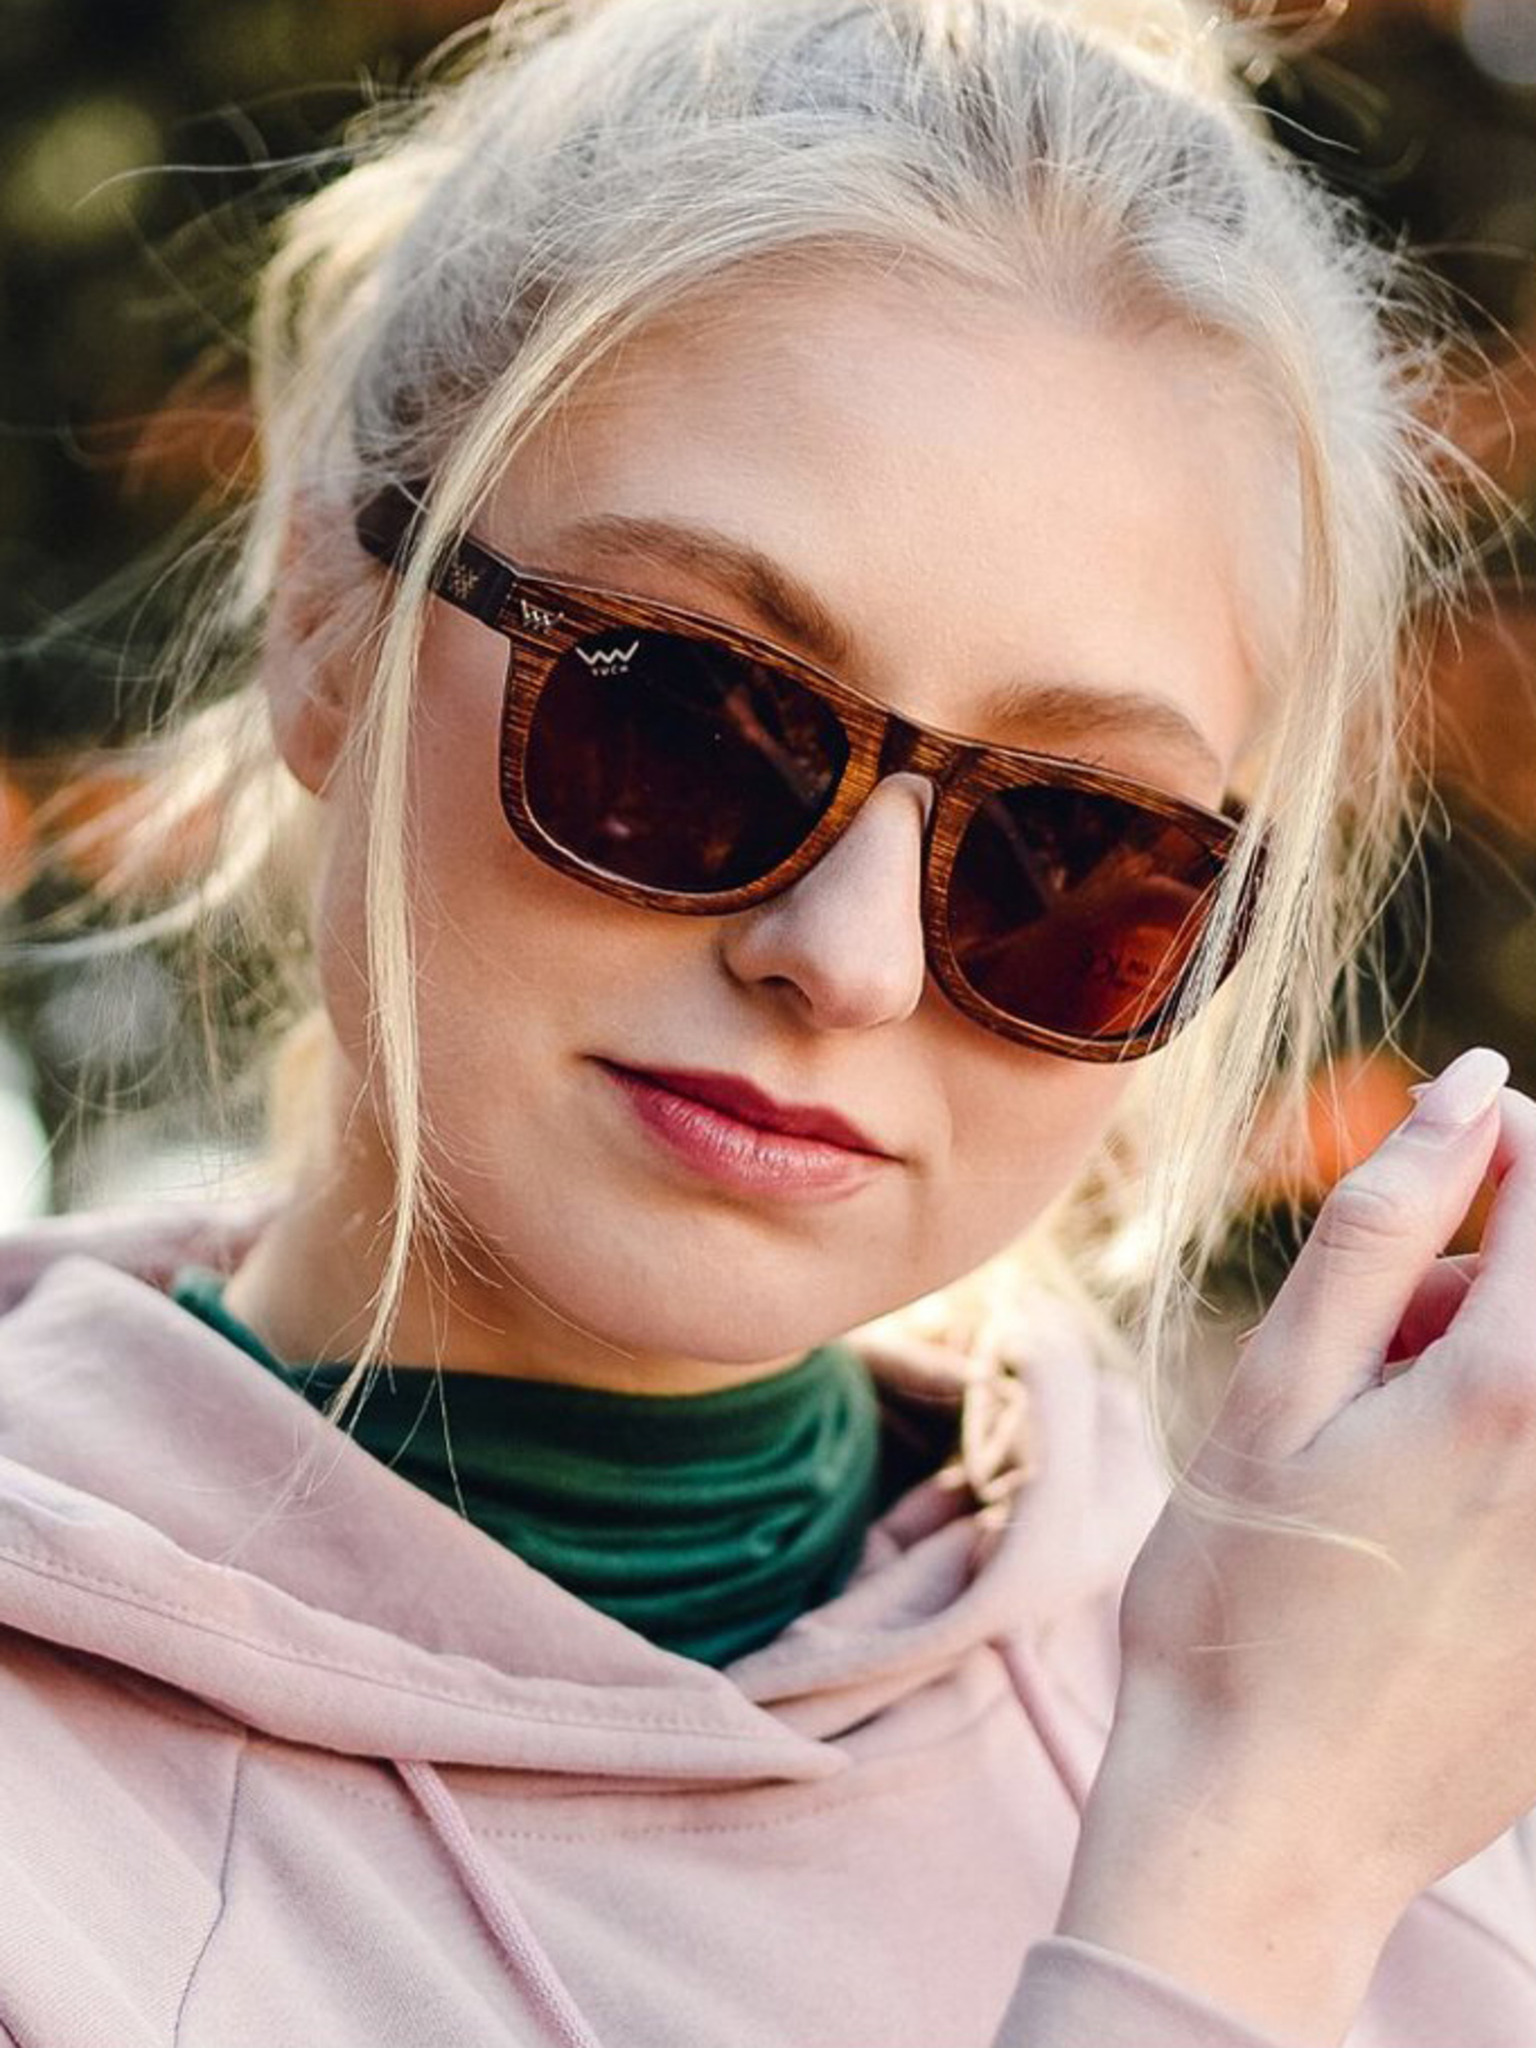 Vuch - Maurus - VUCH - Polarized sunglasses - Sunglasses, Women